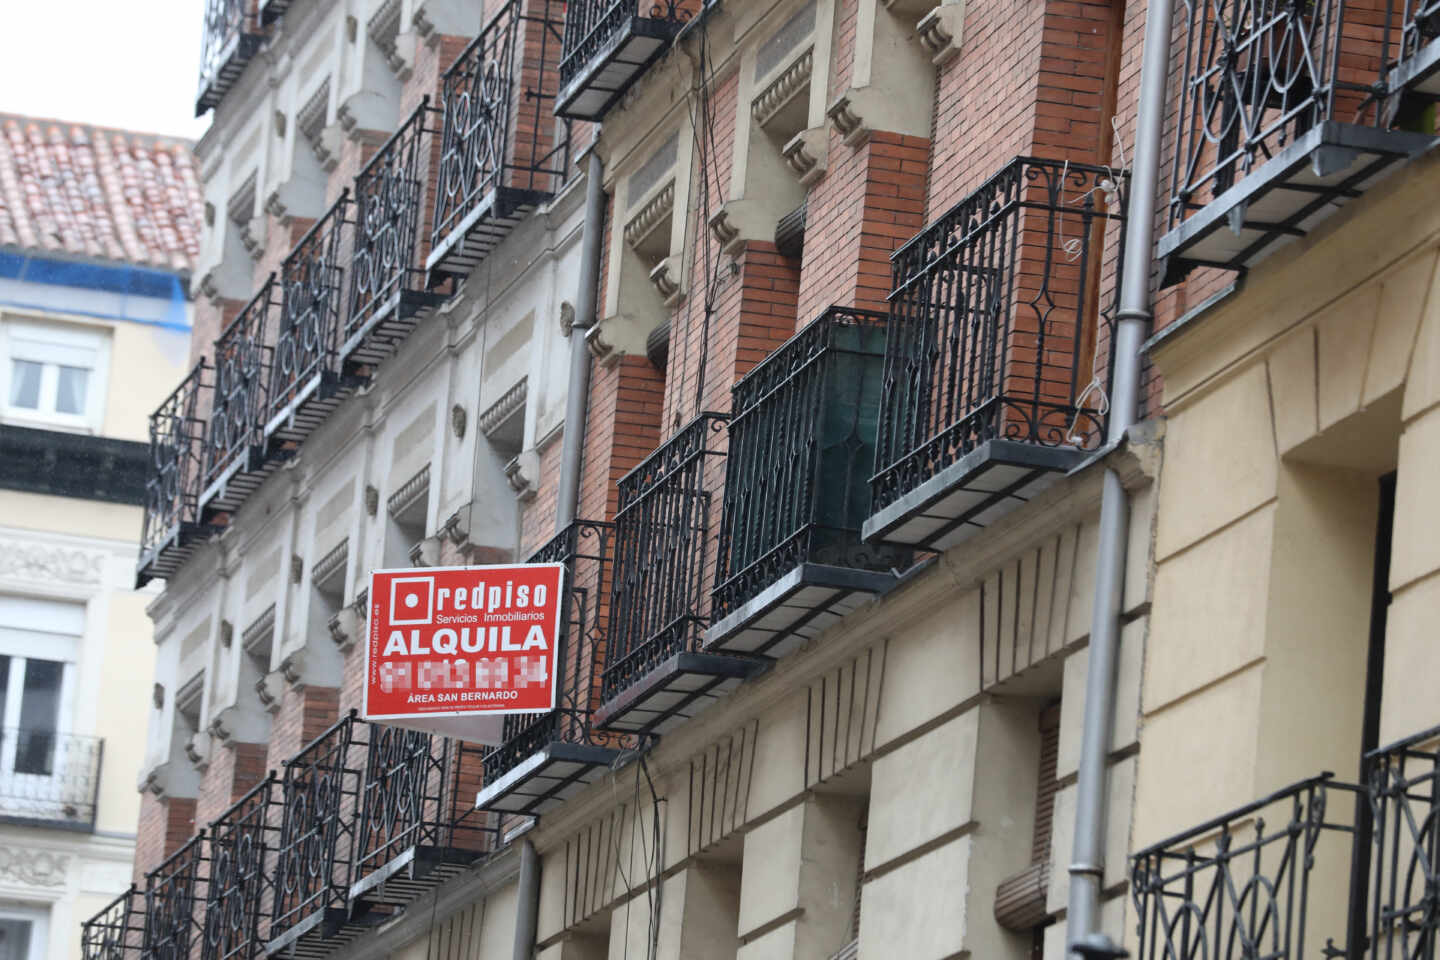 Rent discrepancies keep housing law bogged down